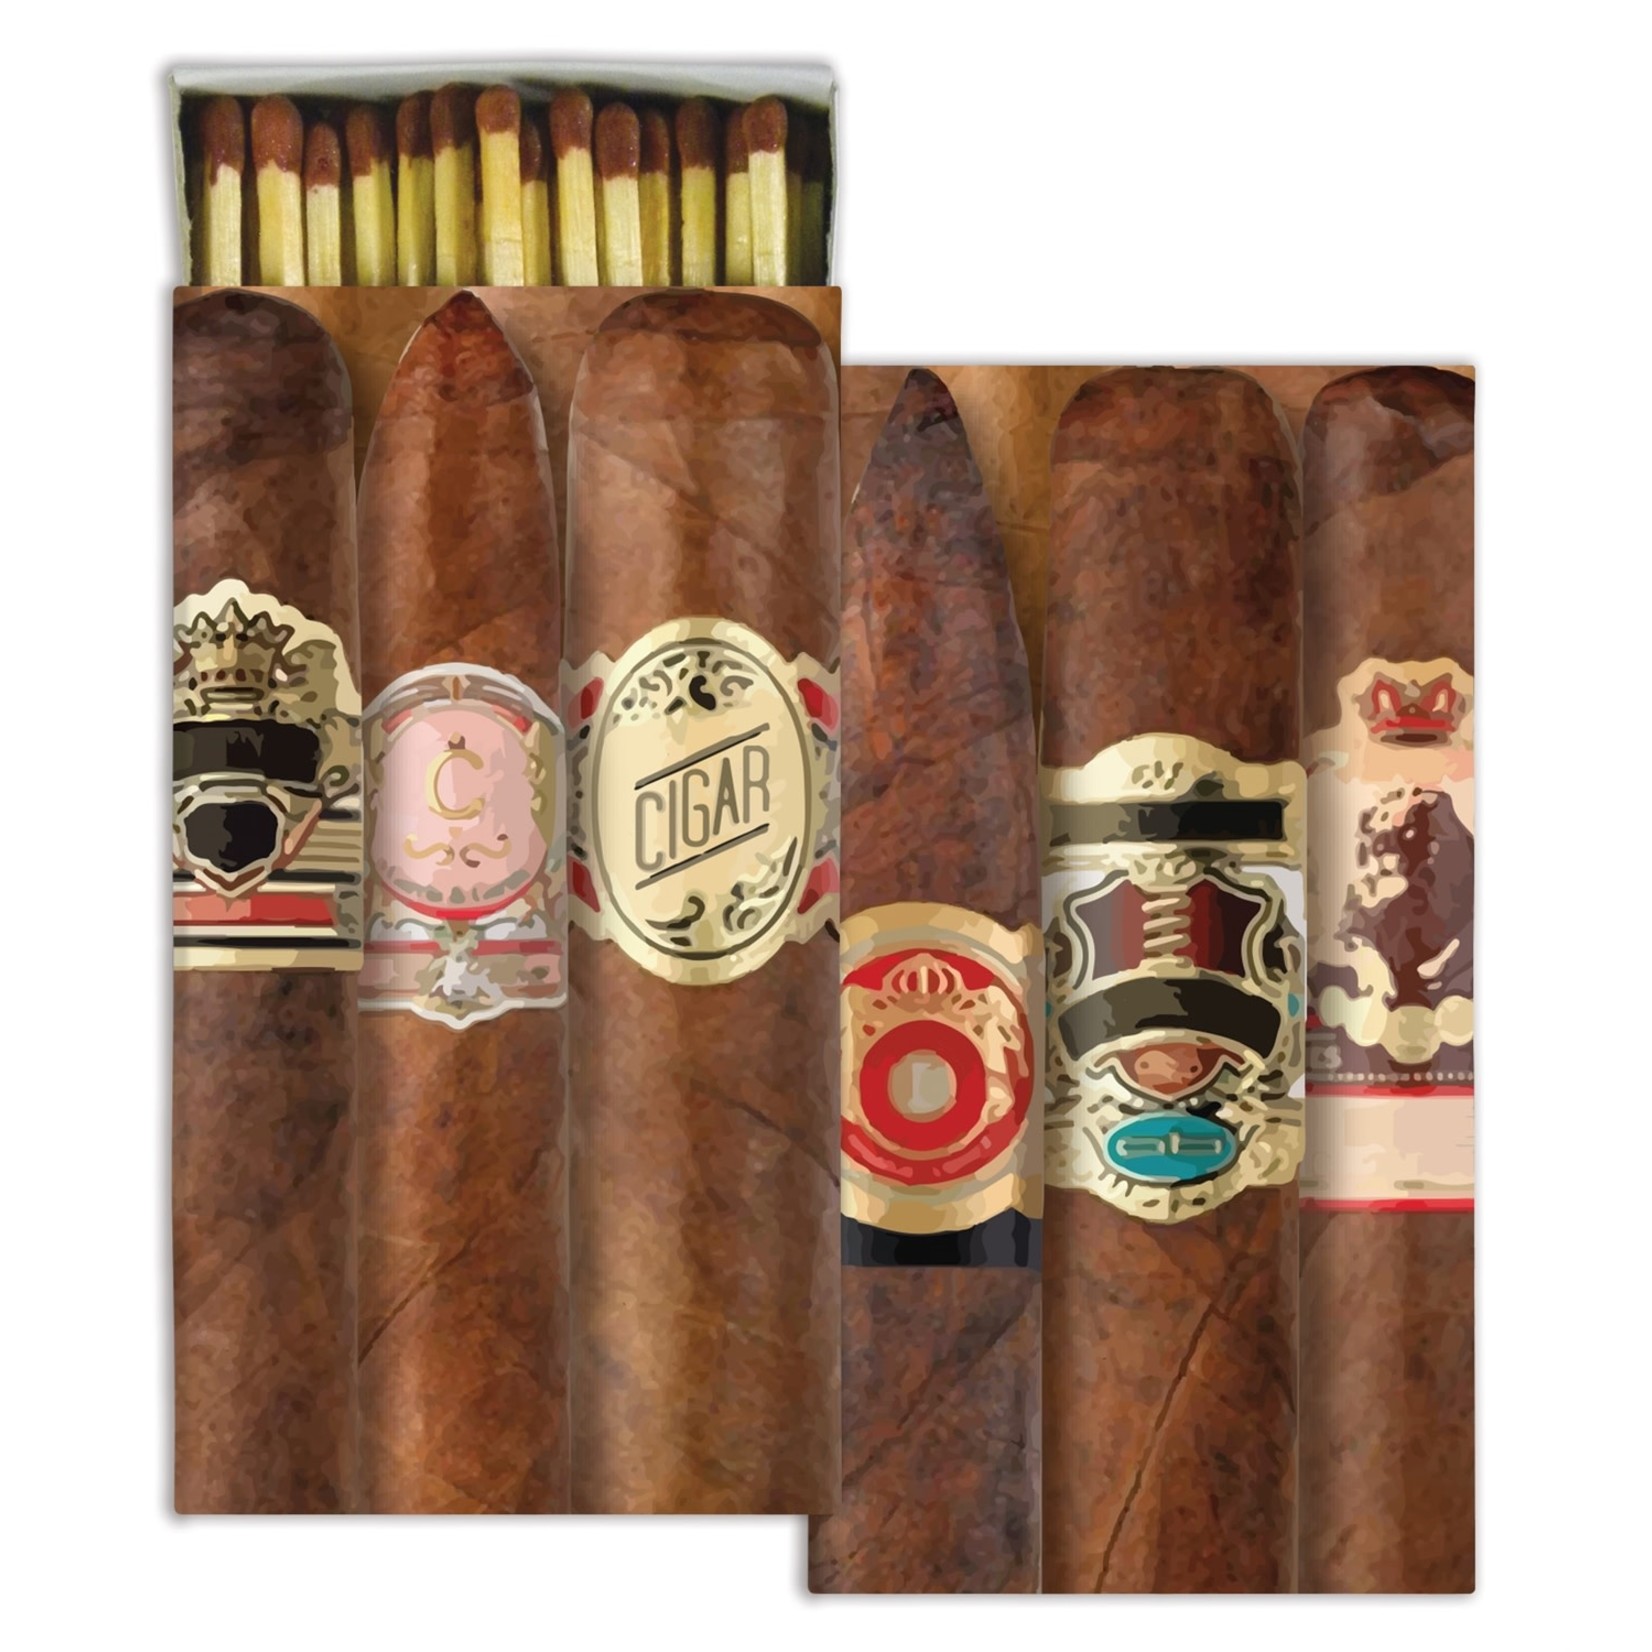 HomArt Matches - Cigars